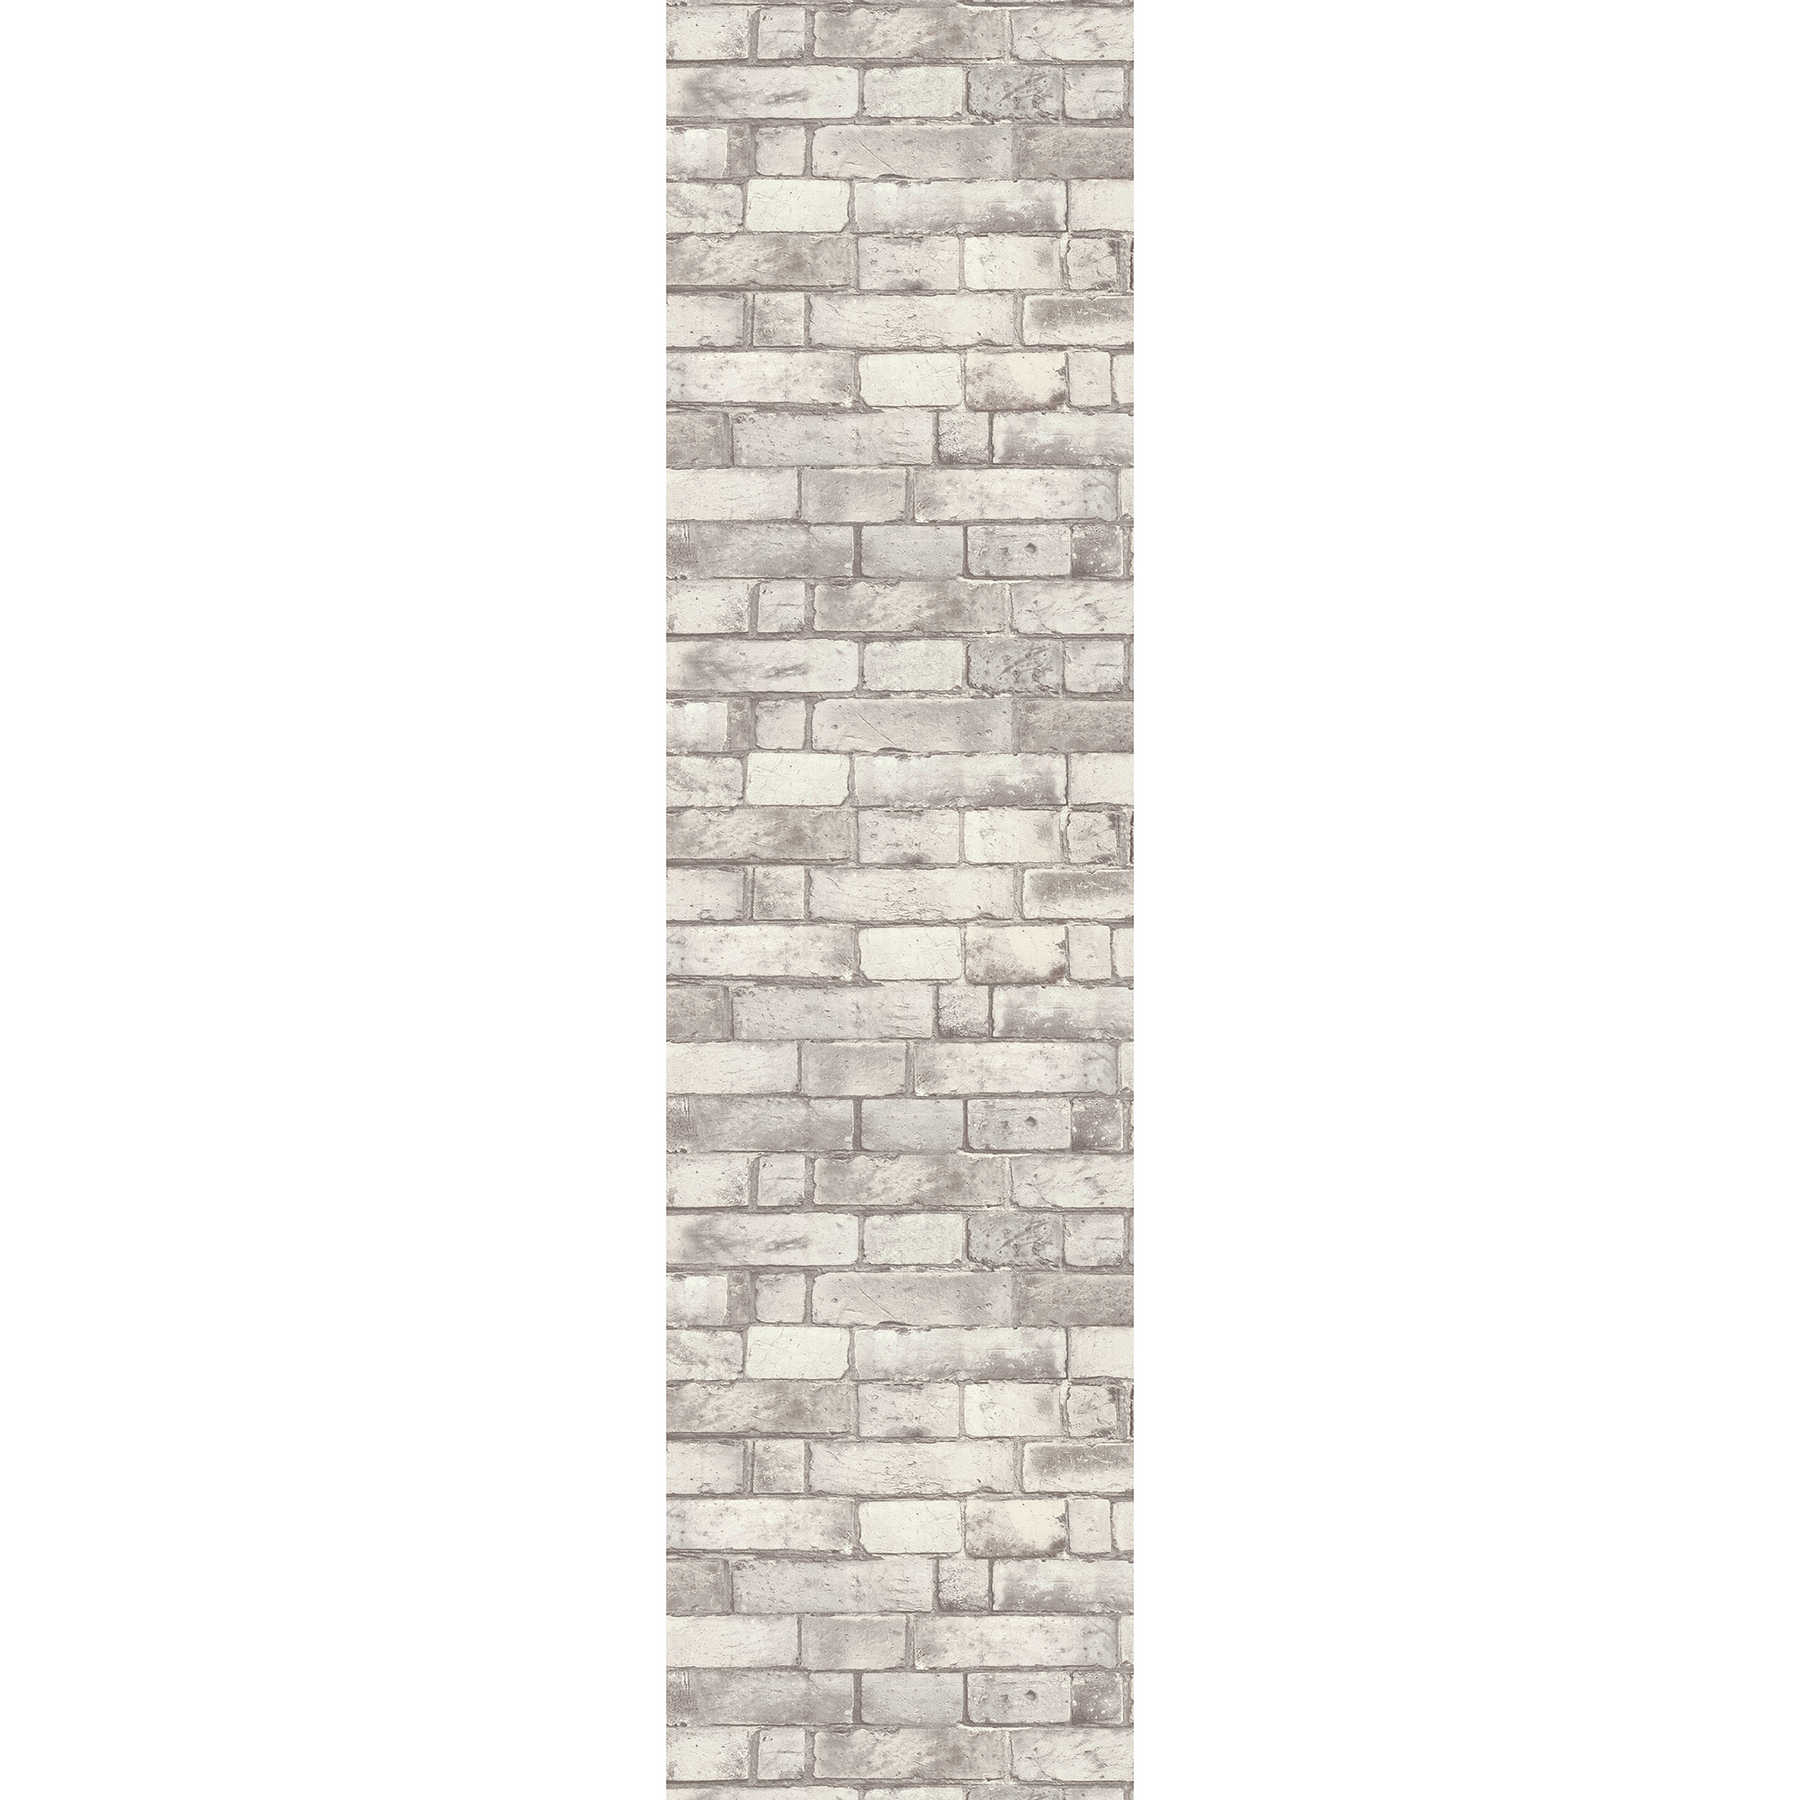 Non-woven wallpaper brick wall in 3D design - grey, white
